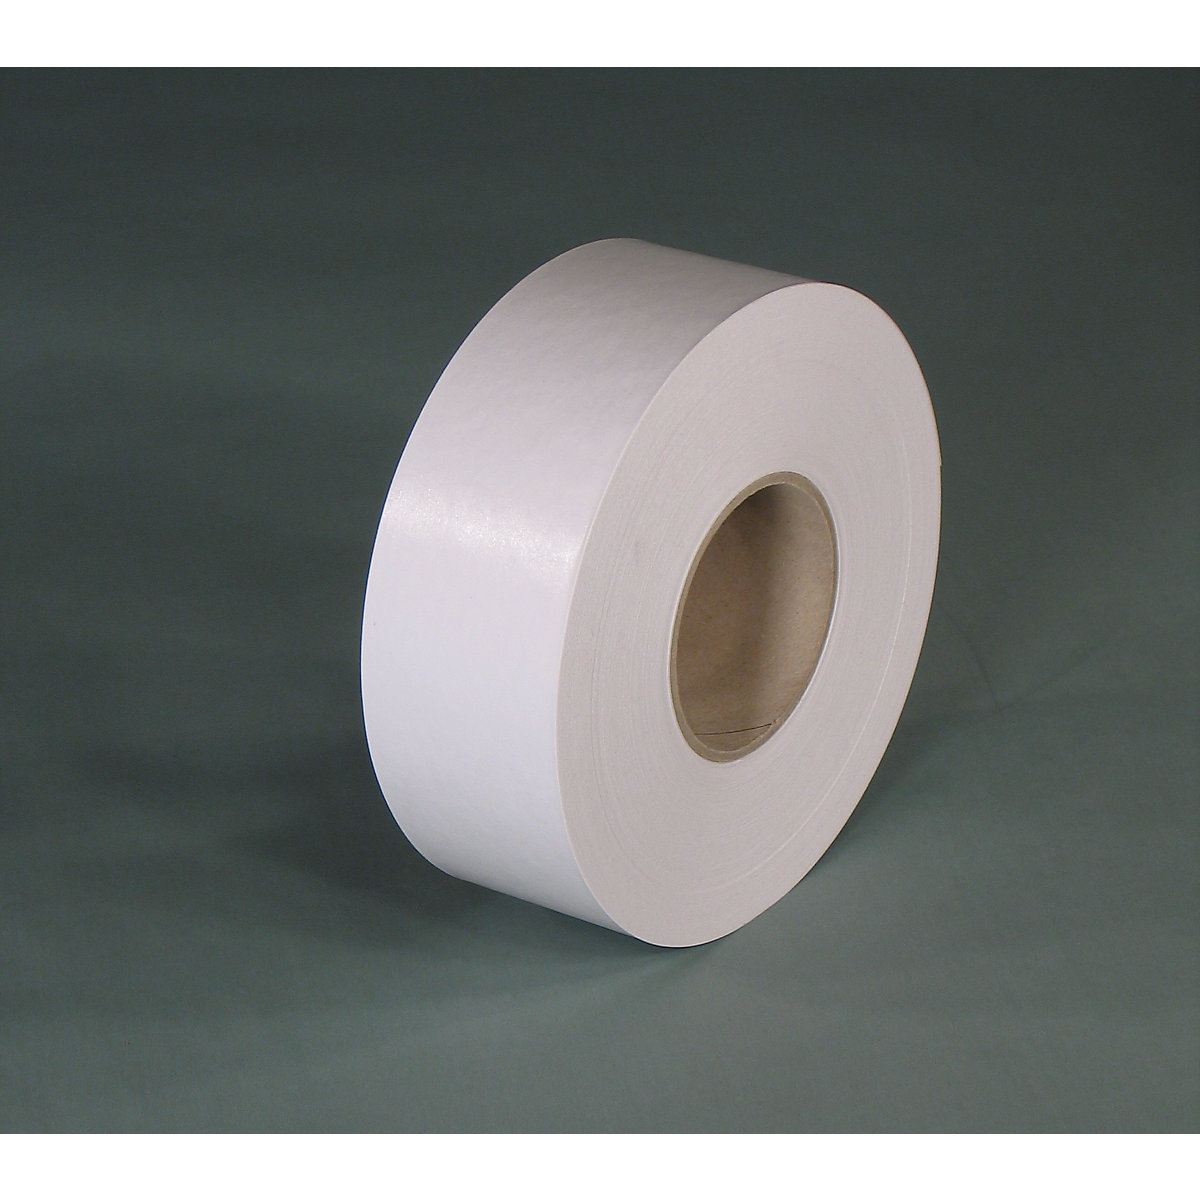 Nastro adesivo in carta bianca riciclabile Tesa - 4713 